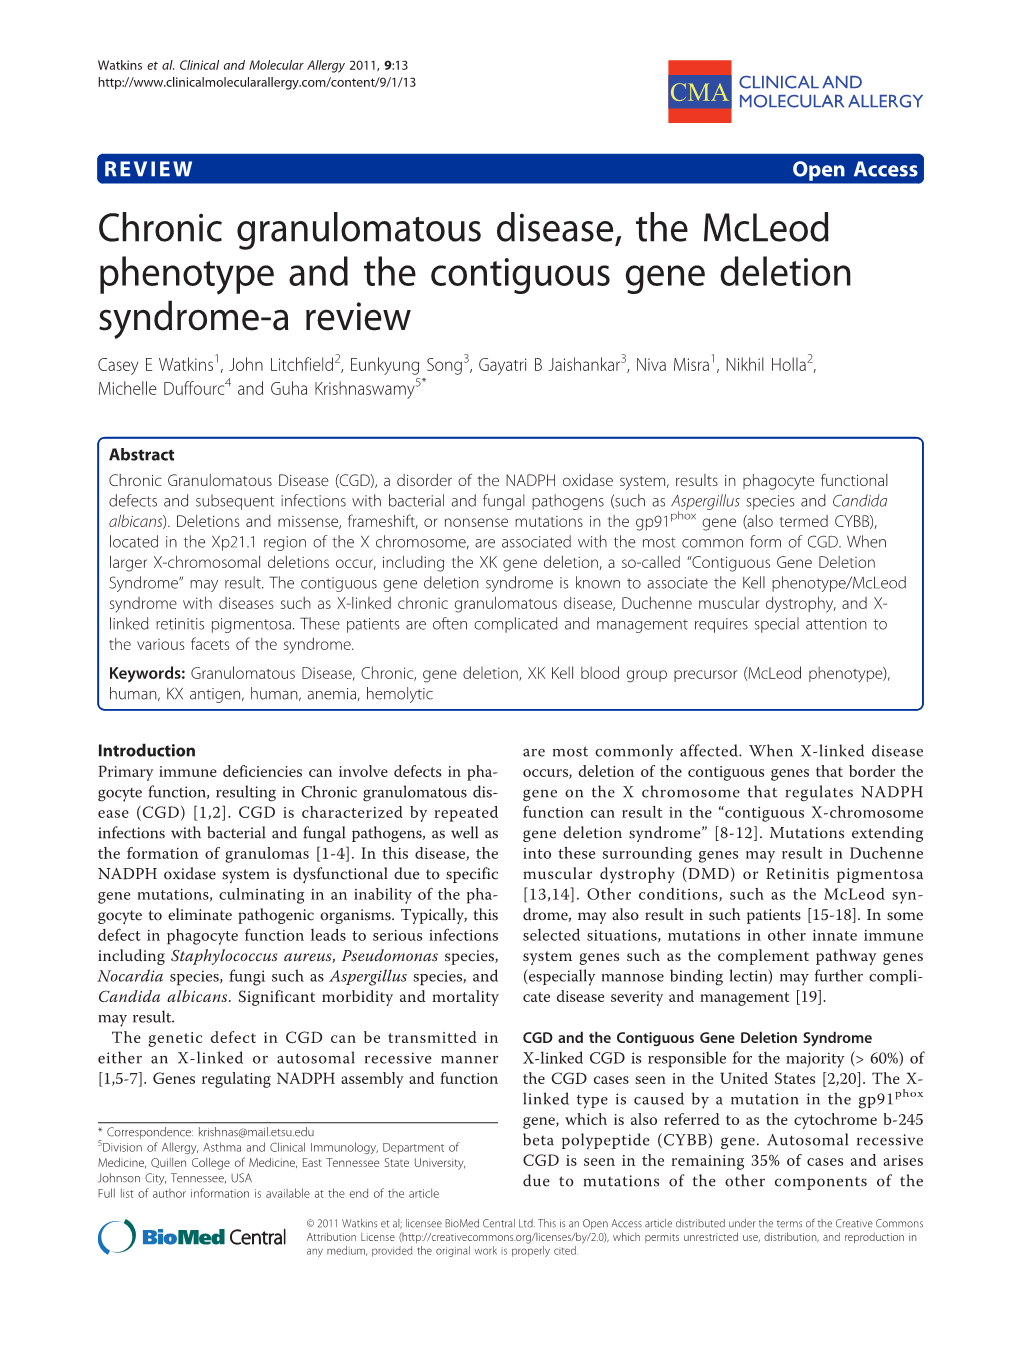 Chronic Granulomatous Disease, the Mcleod Phenotype and The